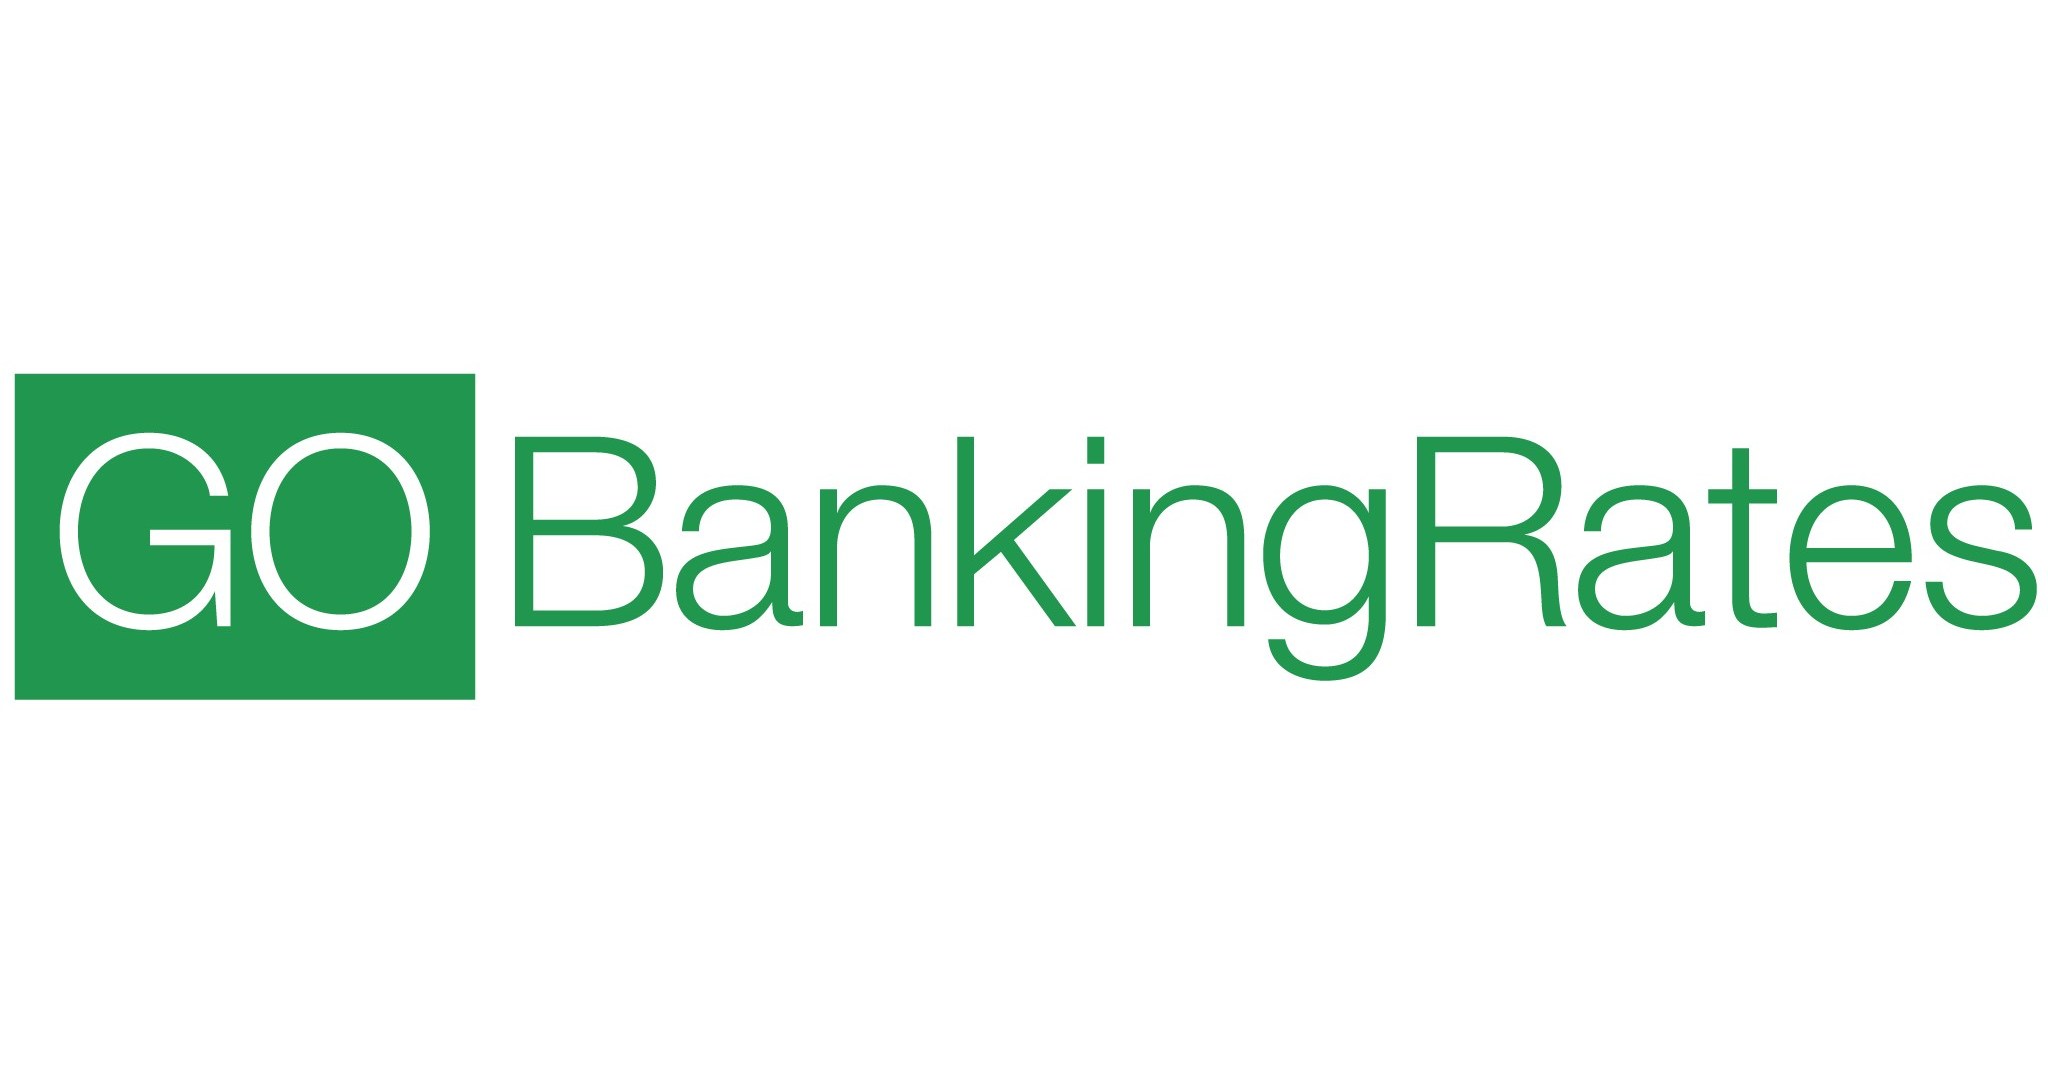 GOBanking Rates logo